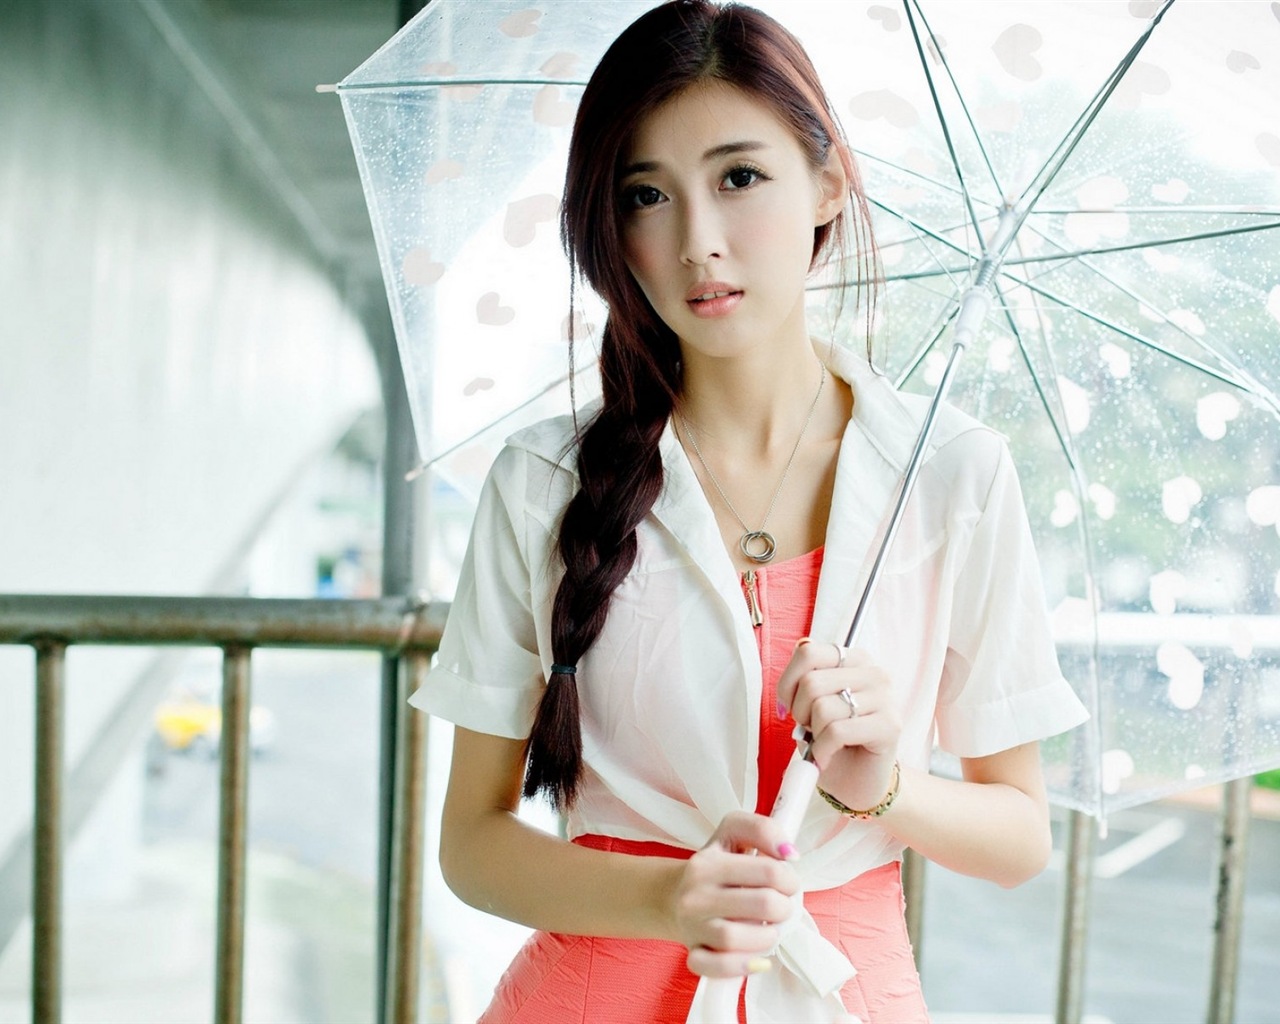 Rainy day pure girl HD wallpaper #2 - 1280x1024